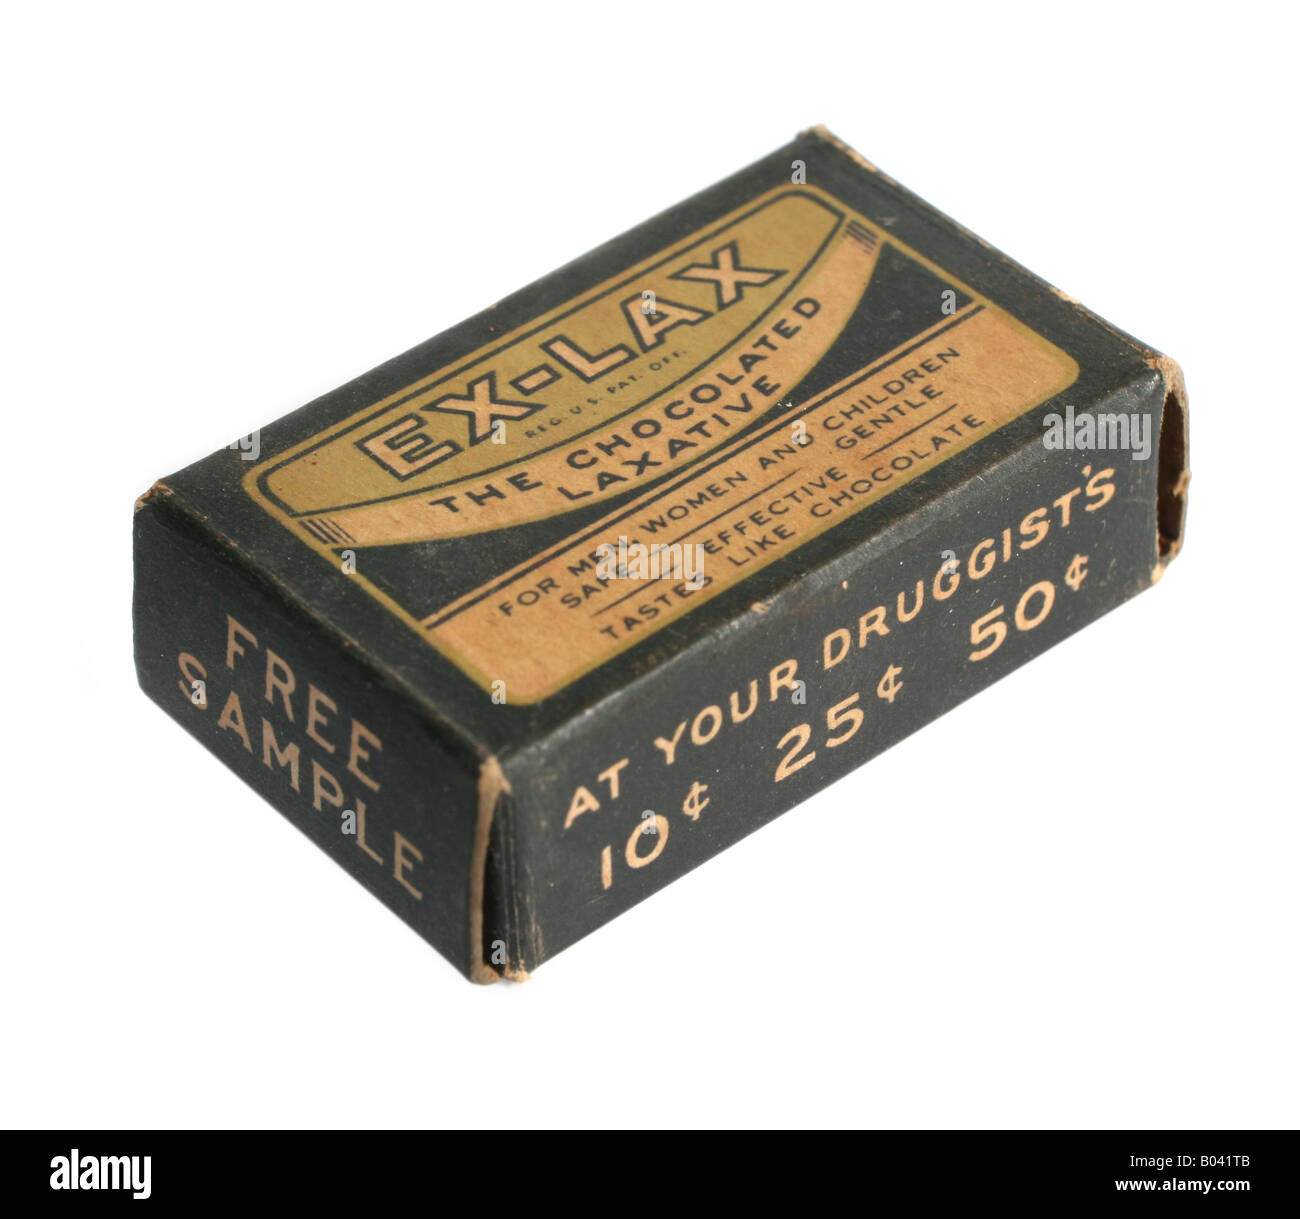 Ca. 1910er Jahre kostenlose Ex-Lax (The Chocolated Abführmittel) Musterbox. Stockfoto